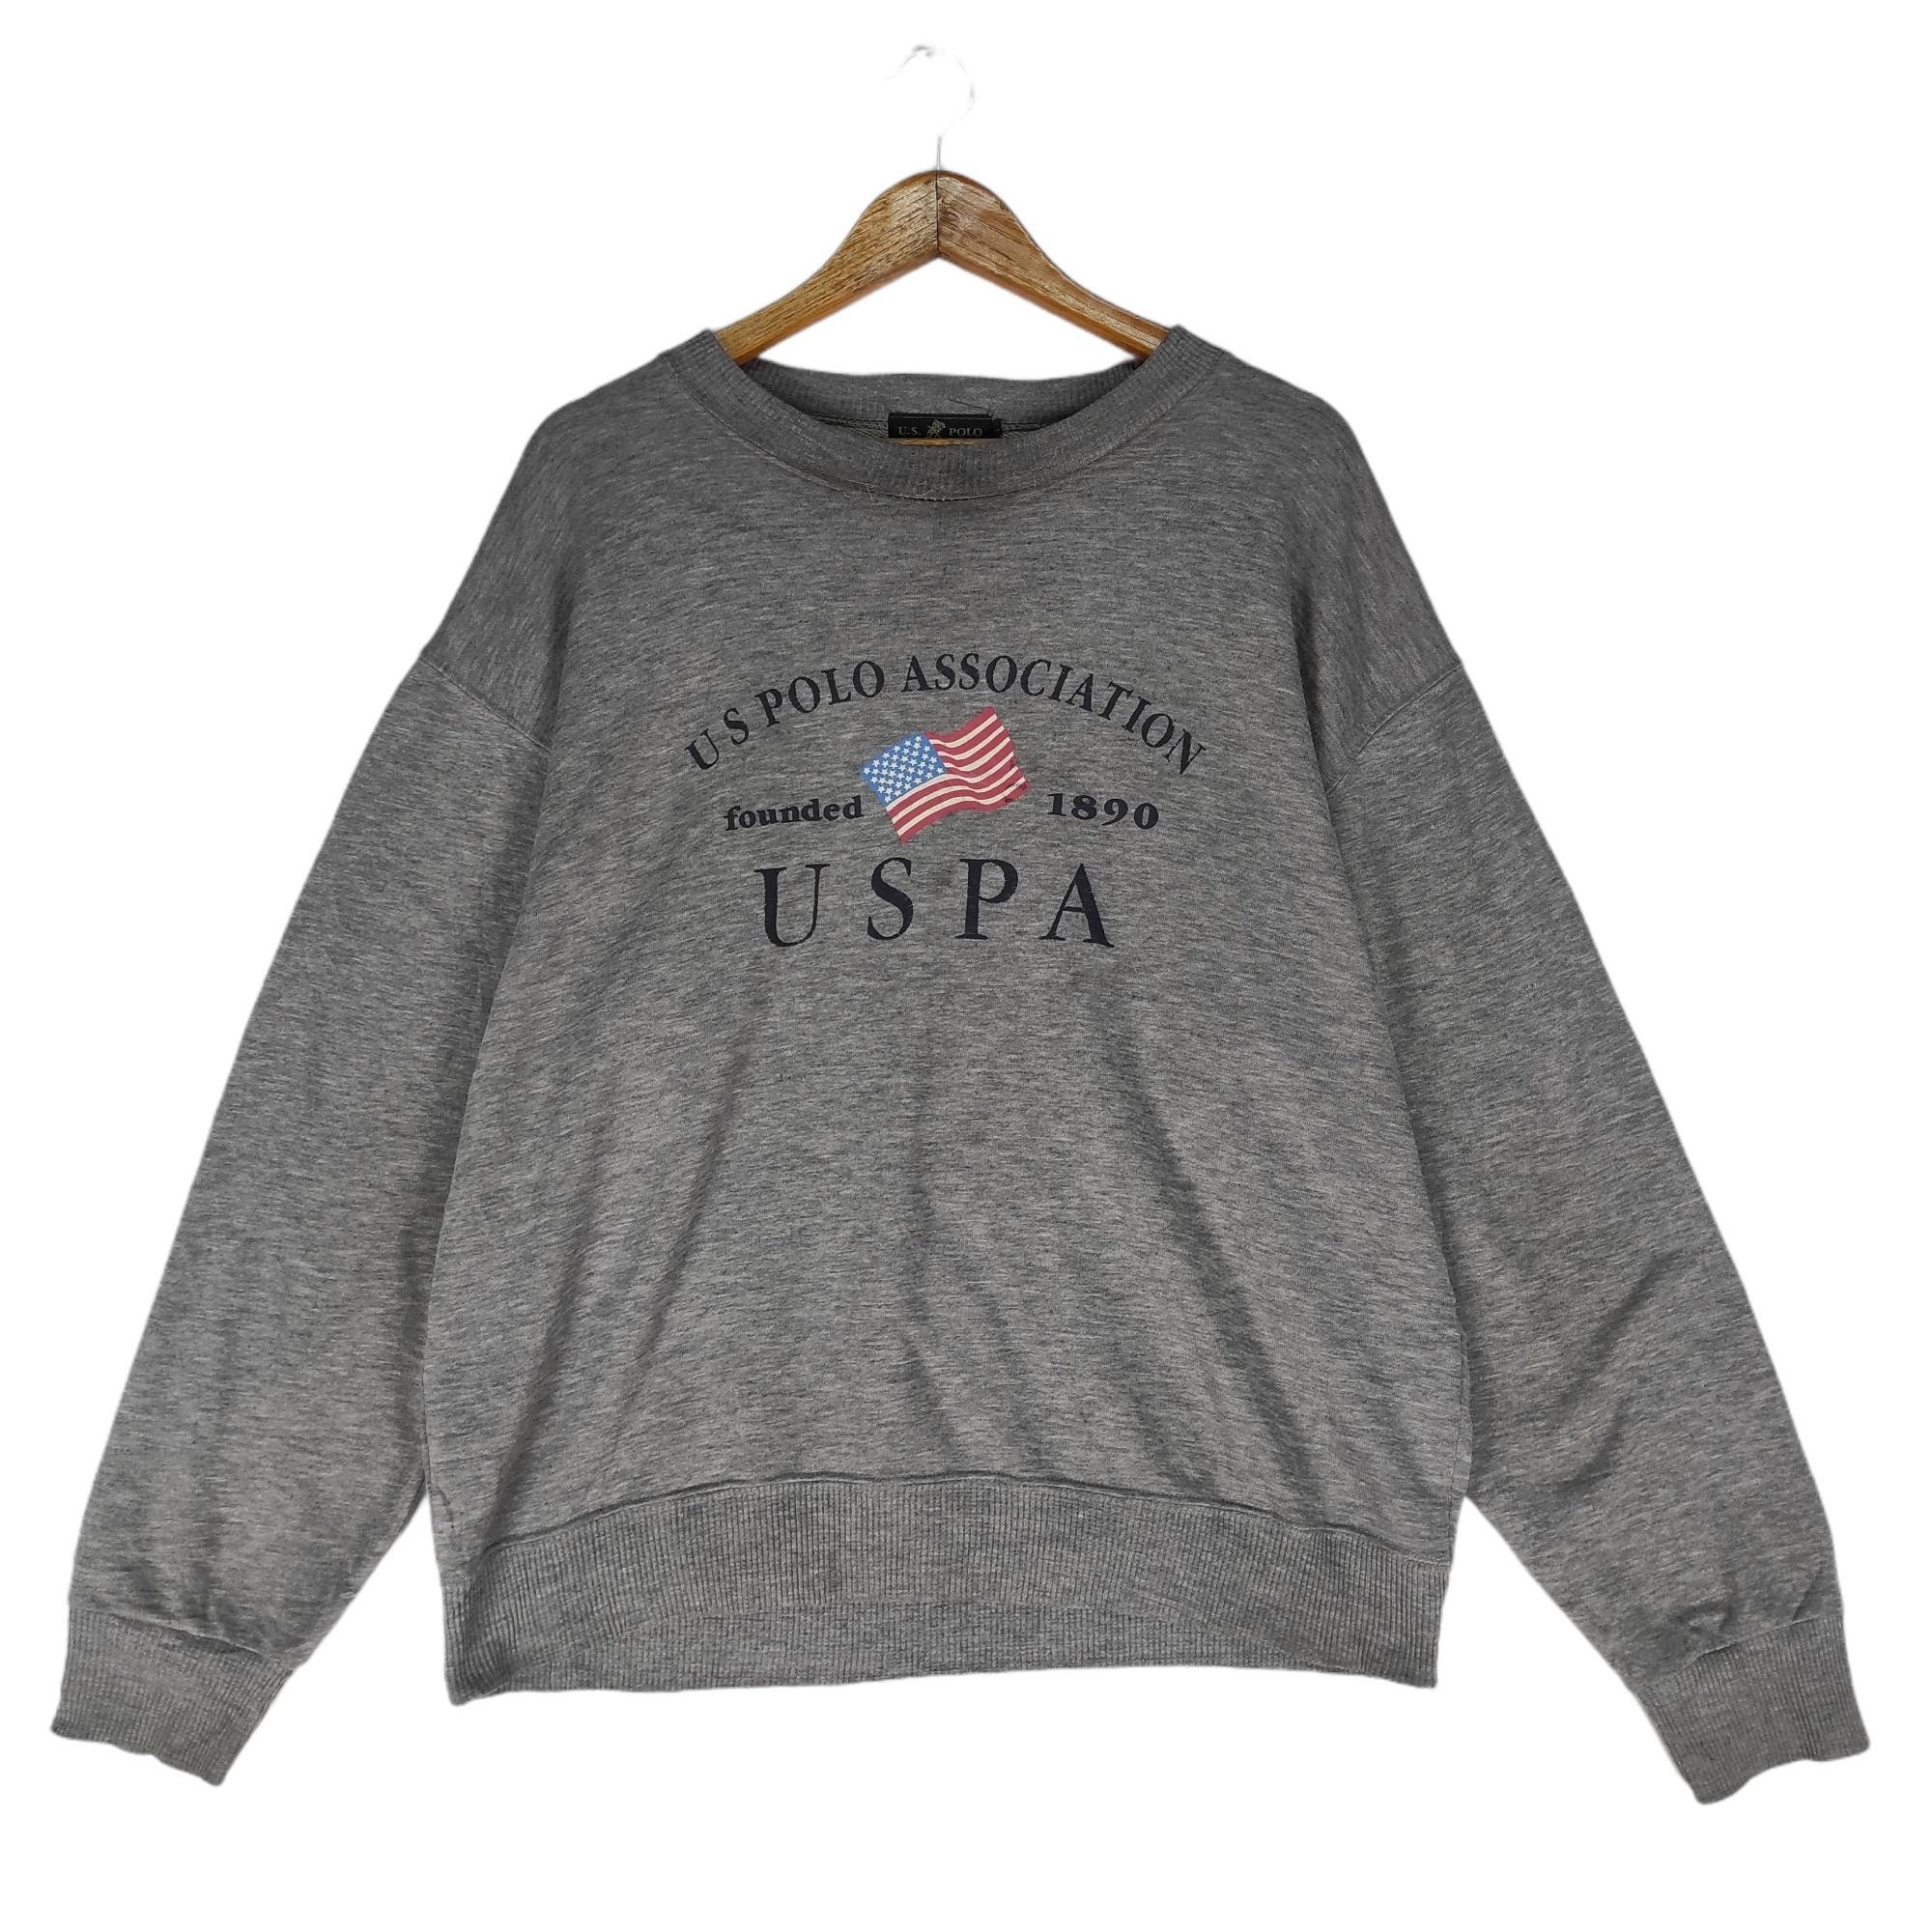 Vintage U.S Polo Uspa rare 1890 big logo spellout sweatshirt | Etsy